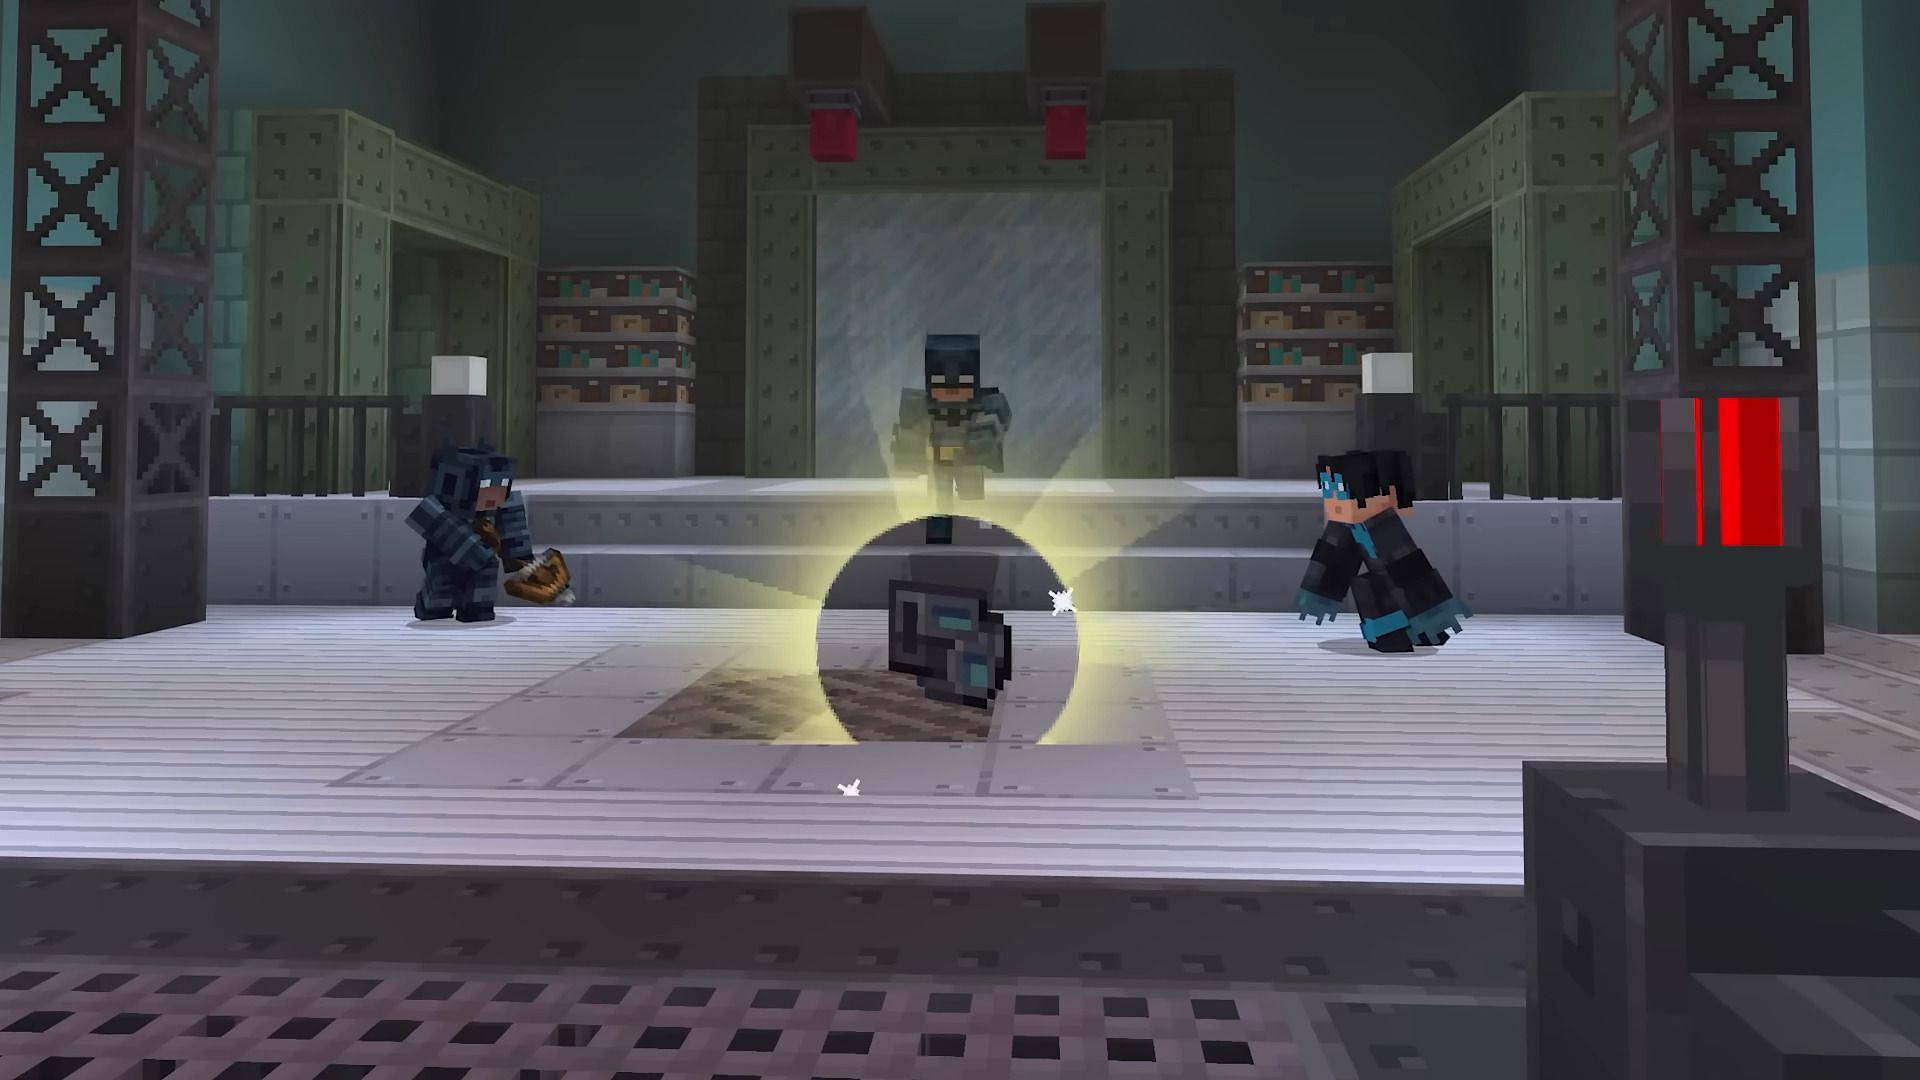 Battle for Gotham City in this Minecraft DLC (Image via Mojang/DC Comics)